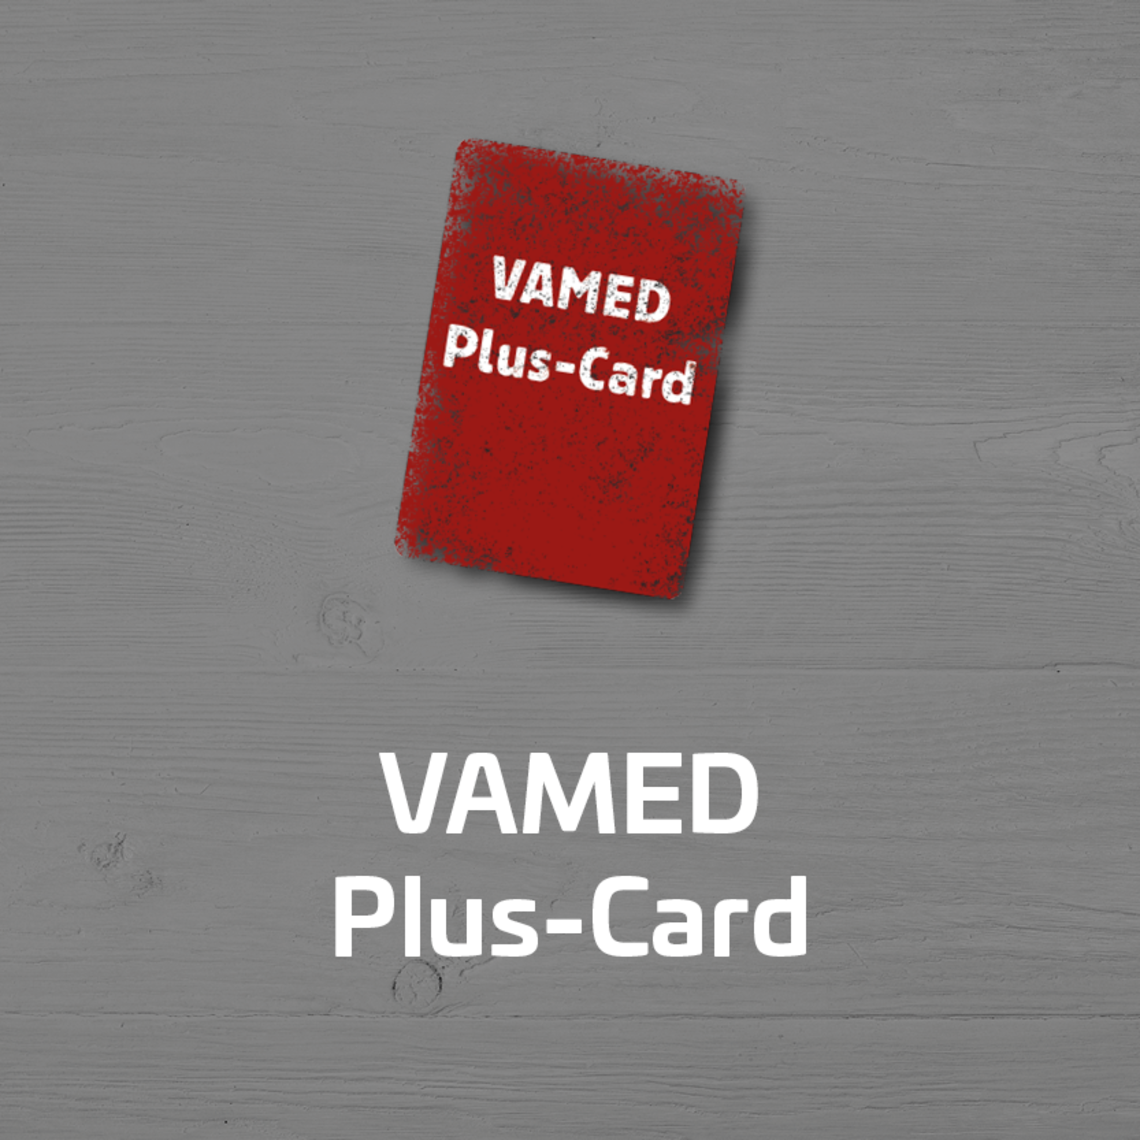 VAMED Plus-Card